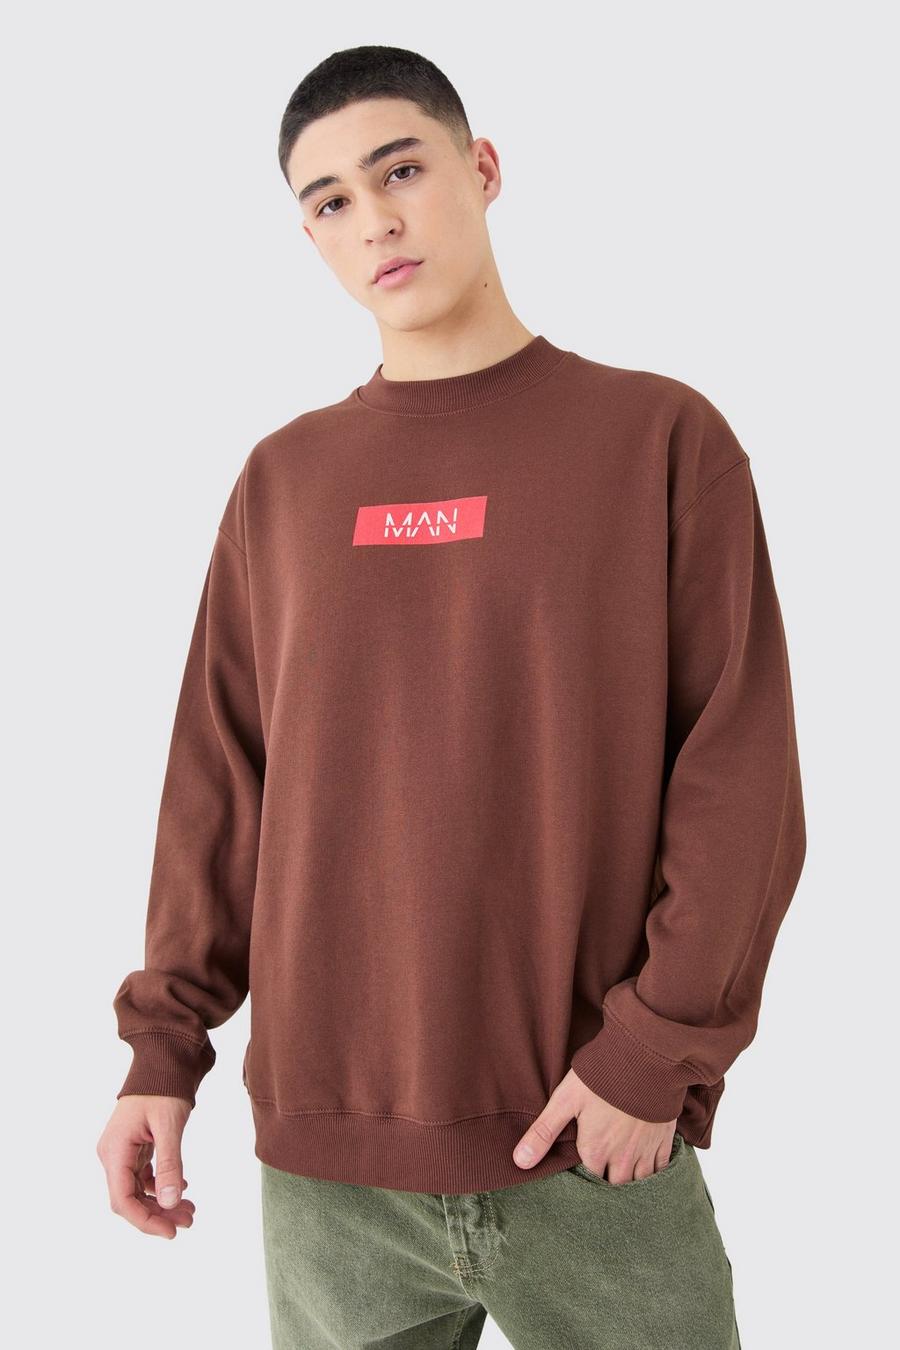  Sweatshirt mit Man-Print, Chocolate